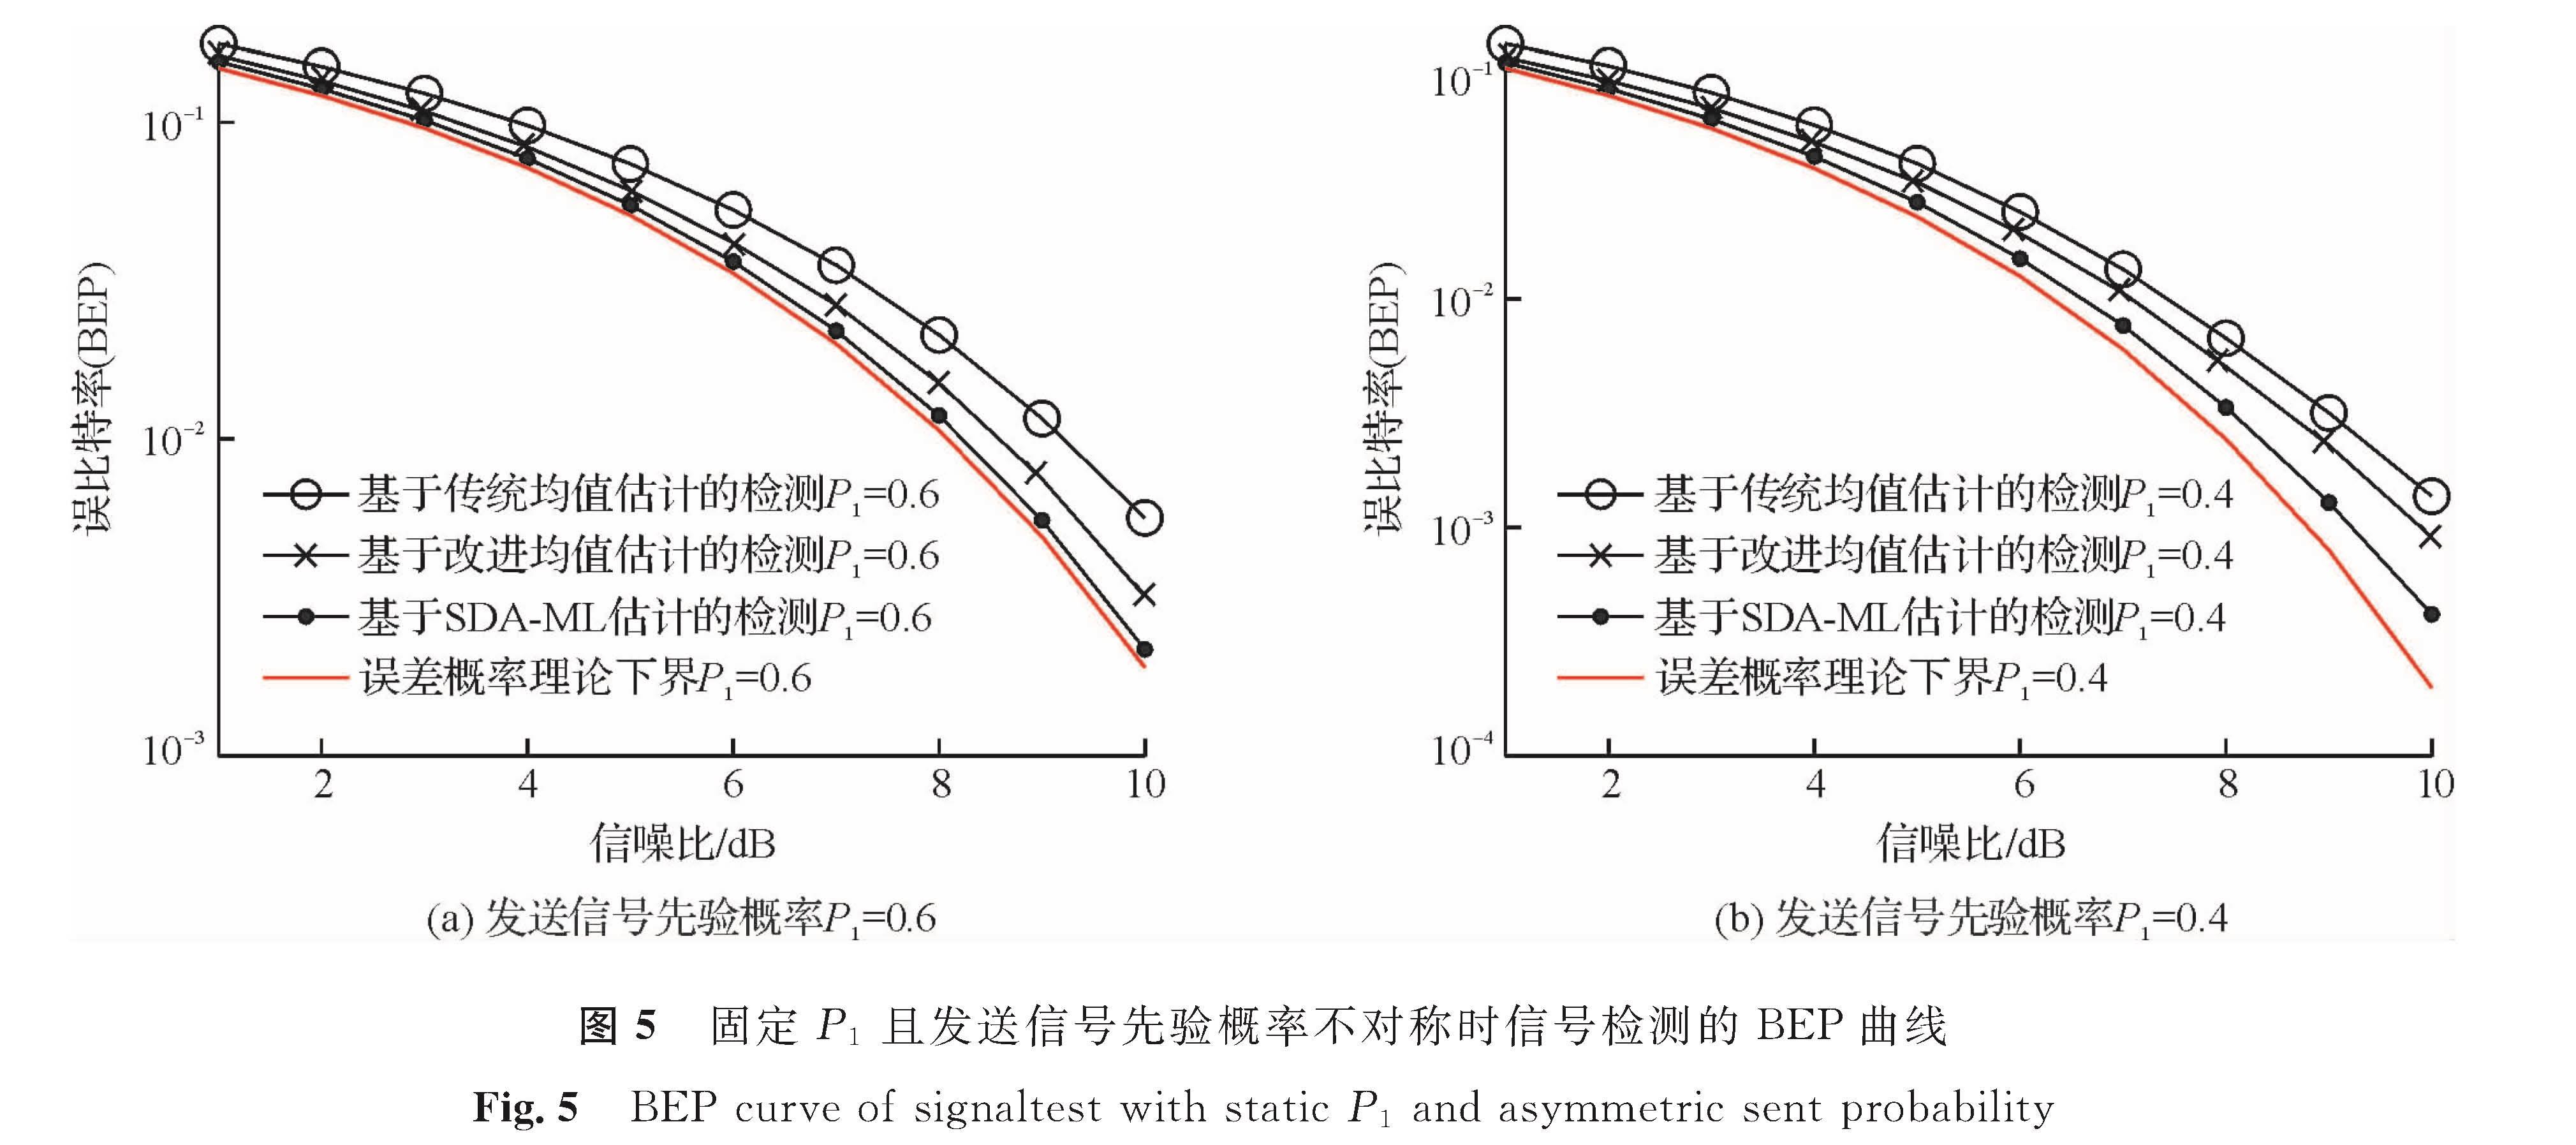 图5 固定P1且发送信号先验概率不对称时信号检测的BEP曲线<br/>Fig.5 BEP curve of signaltest with static P1 and asymmetric sent probability